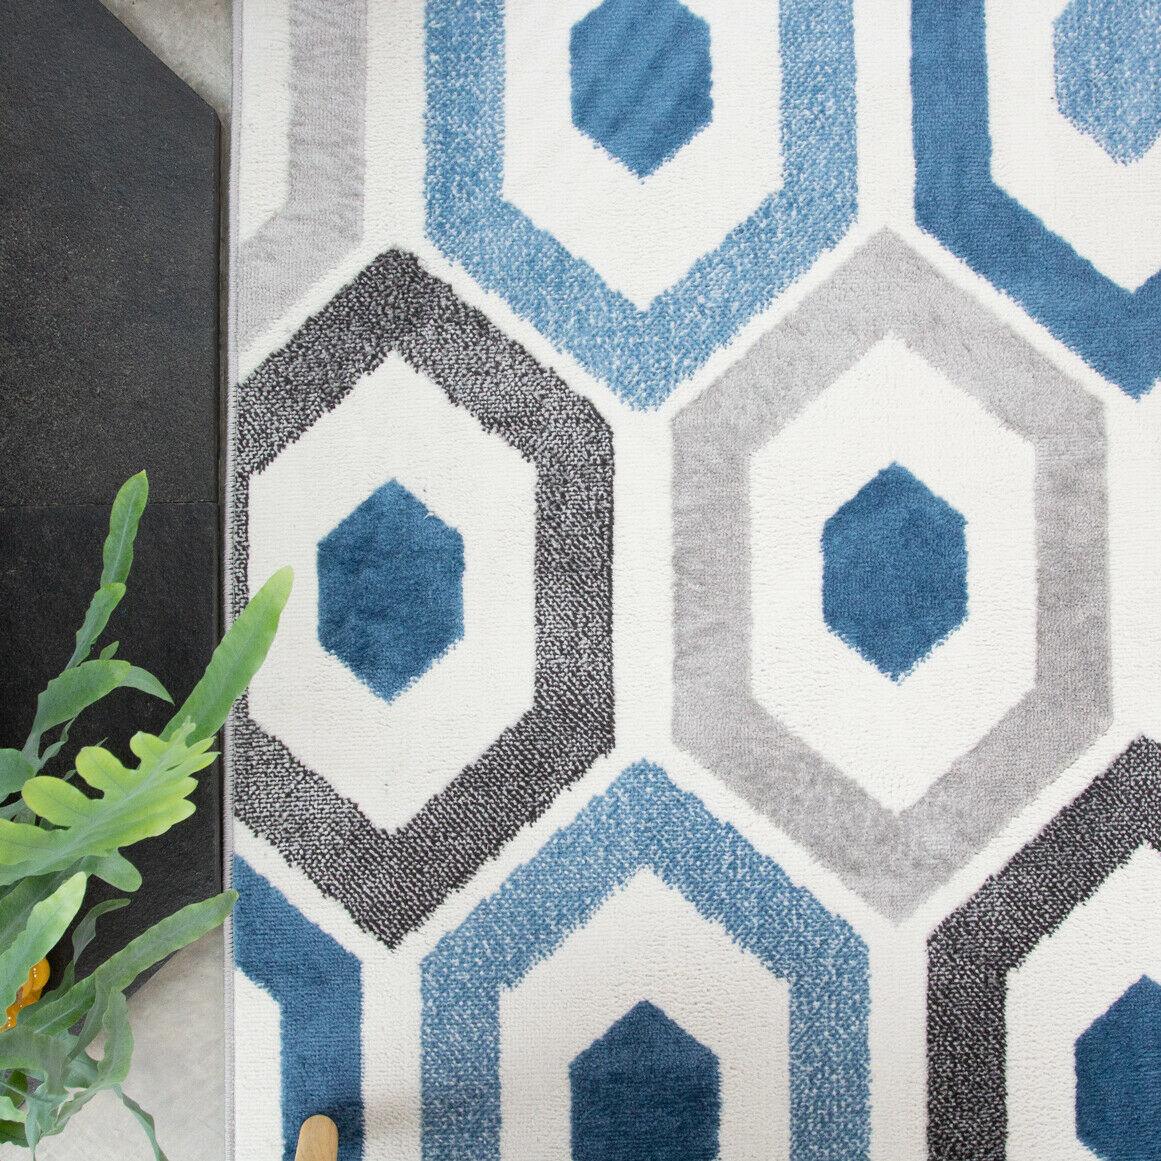 Honeycomb Geometric Tile Floor Area Rug Runner - Blue Grey - Home Inspired Gifts